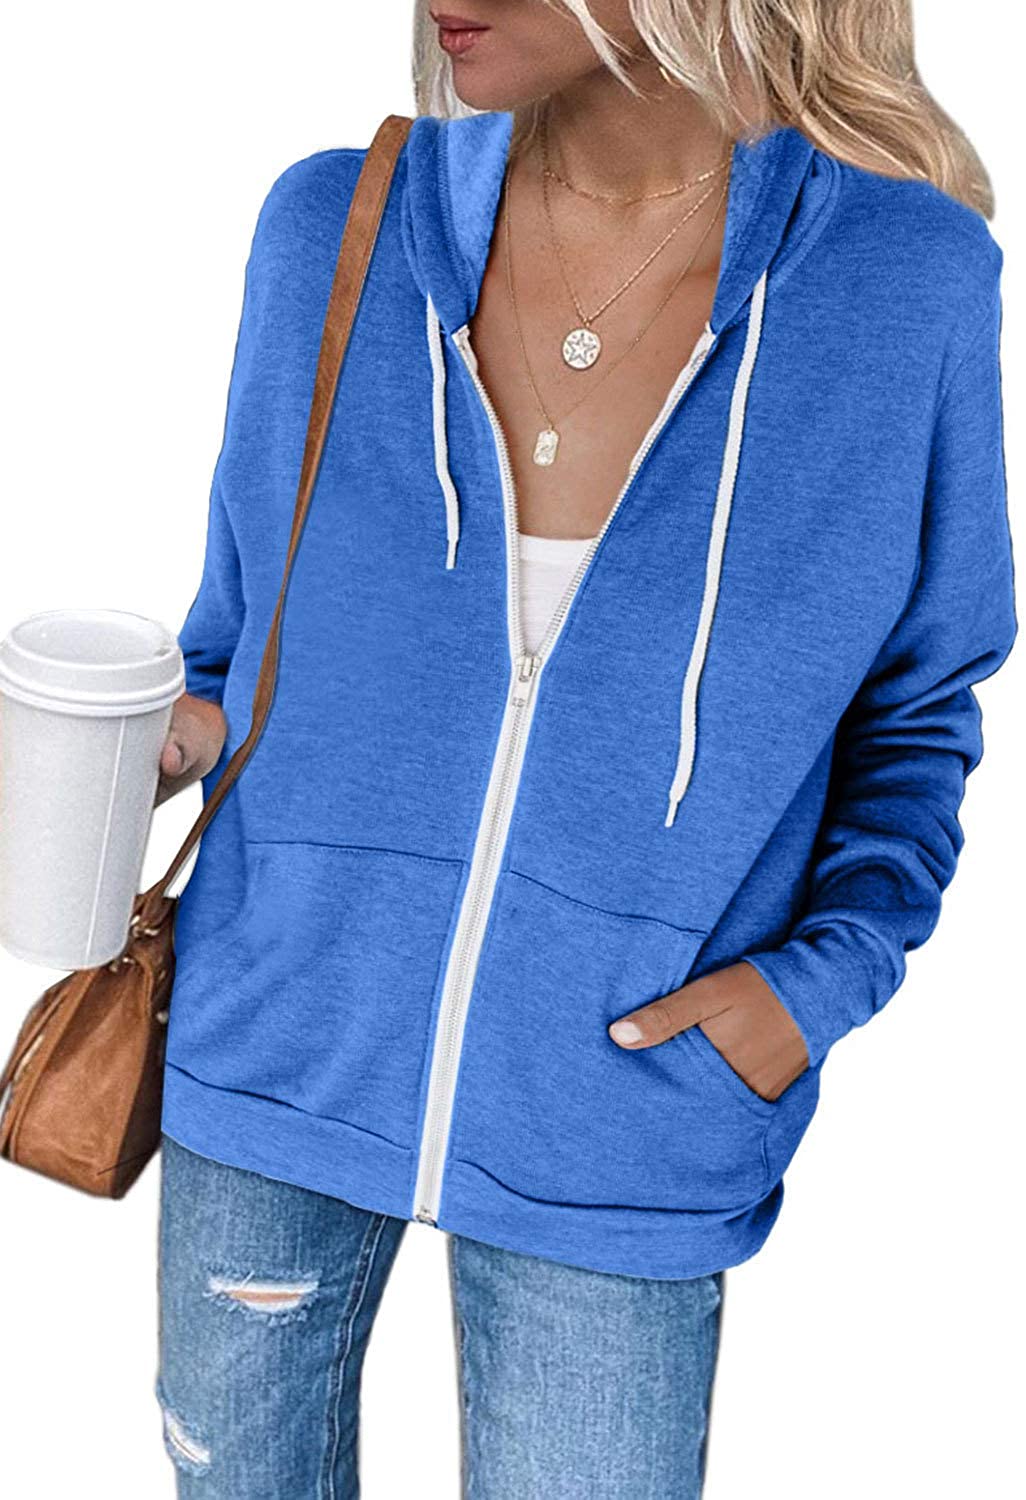 S-XXL Acelitt Women Casual Long Sleeve Zip Up Hooded Sweatshirt Hoodies 